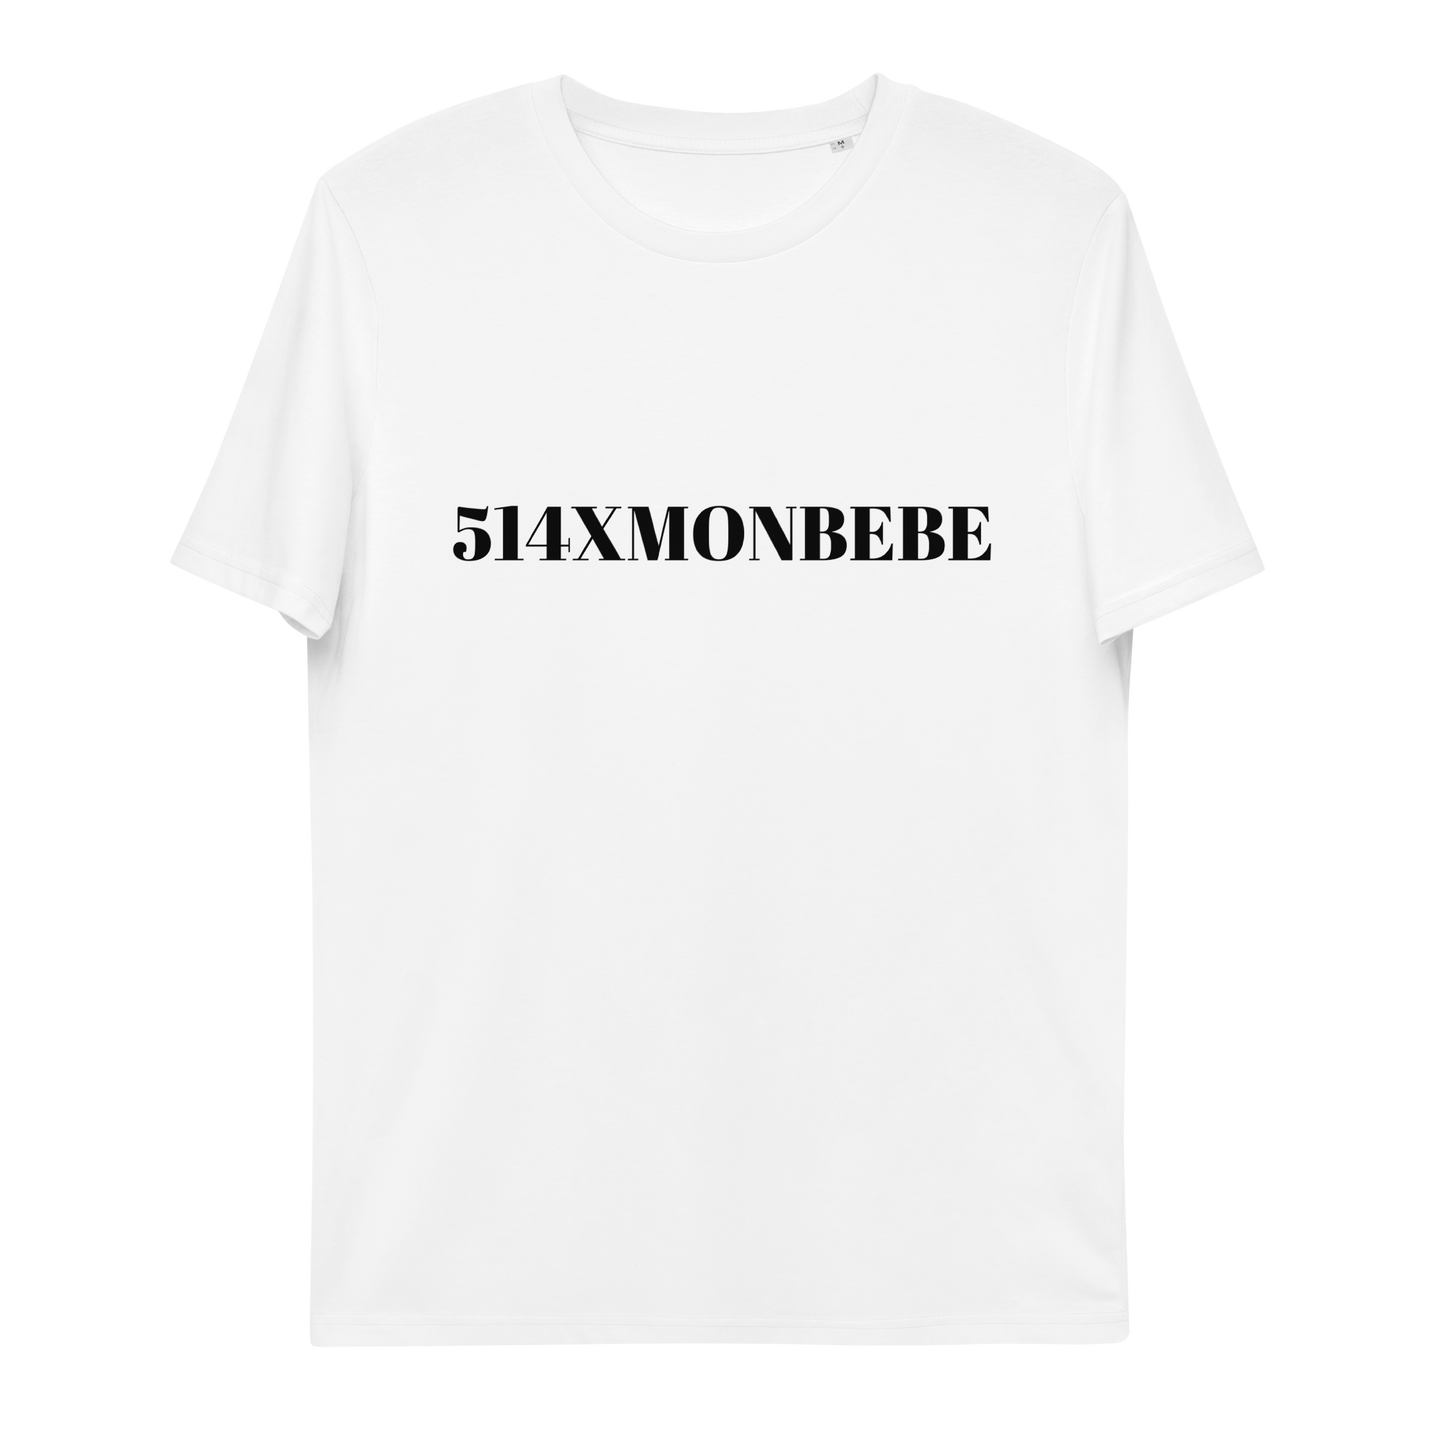 514XMONBEBE T-Shirt